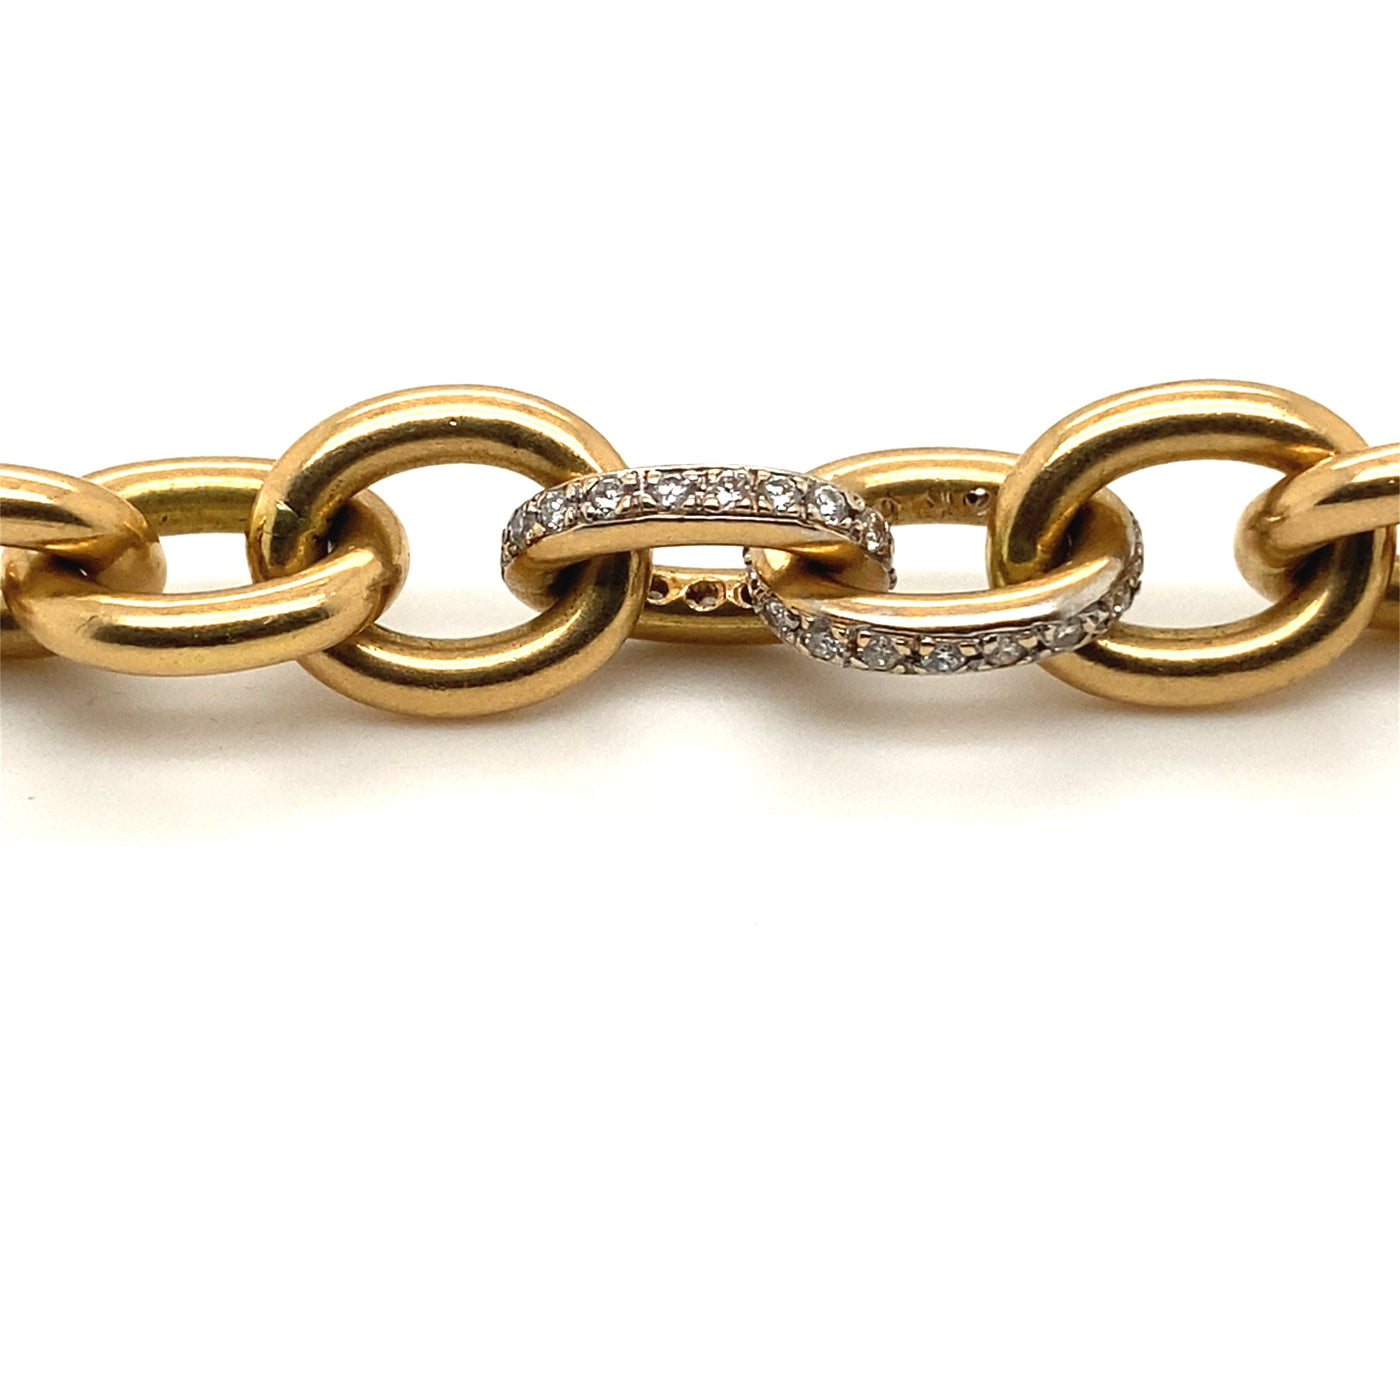 The Chain - Extravagante Goldkette mit Diamanten